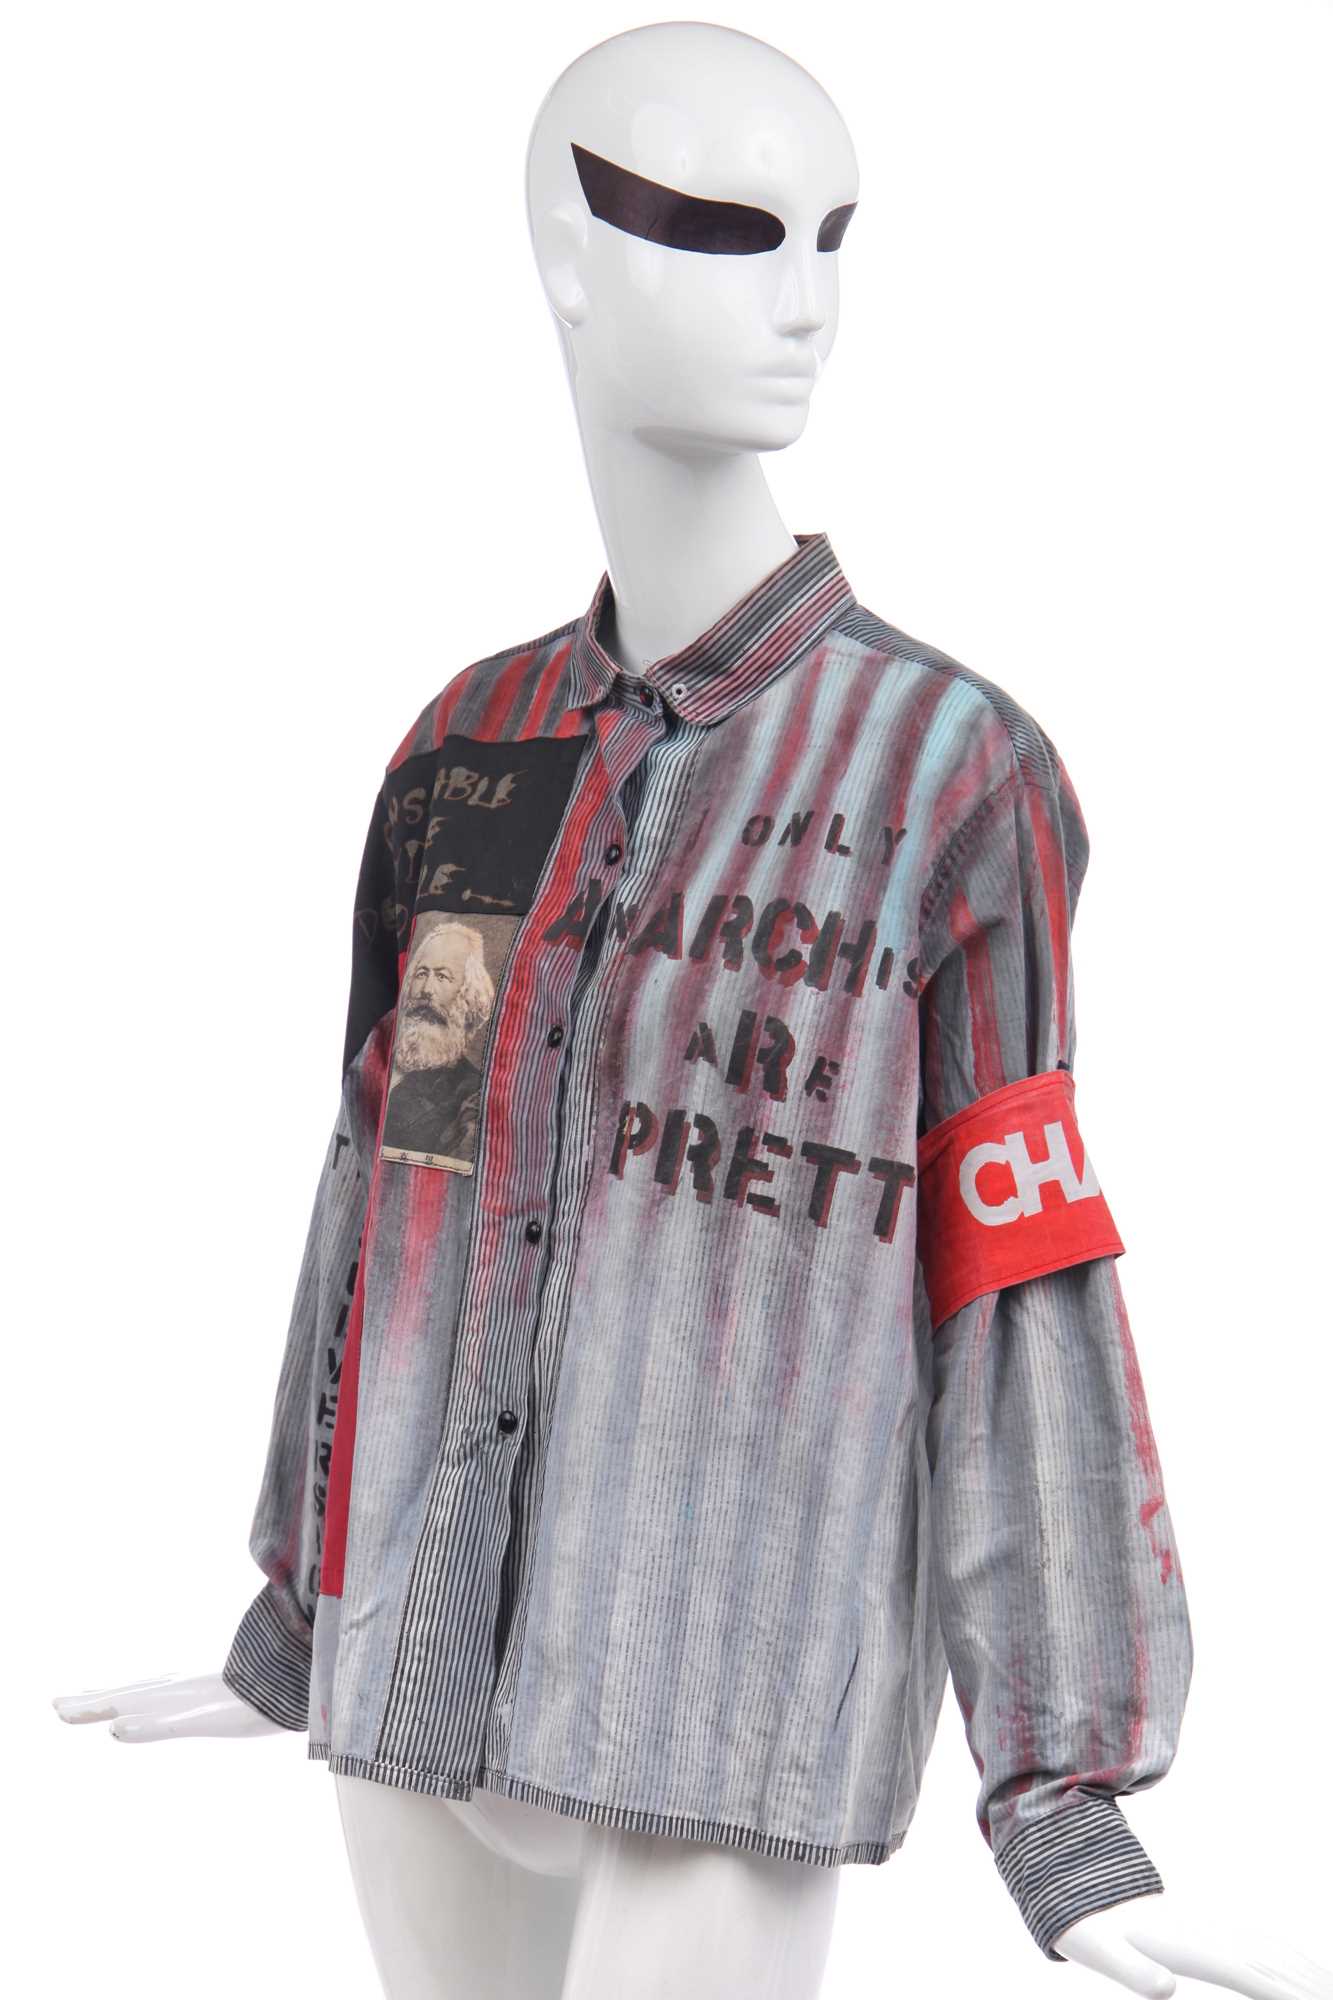 Lot 78 - Jordan's reproduction 'Anarchy'-style shirt, modern